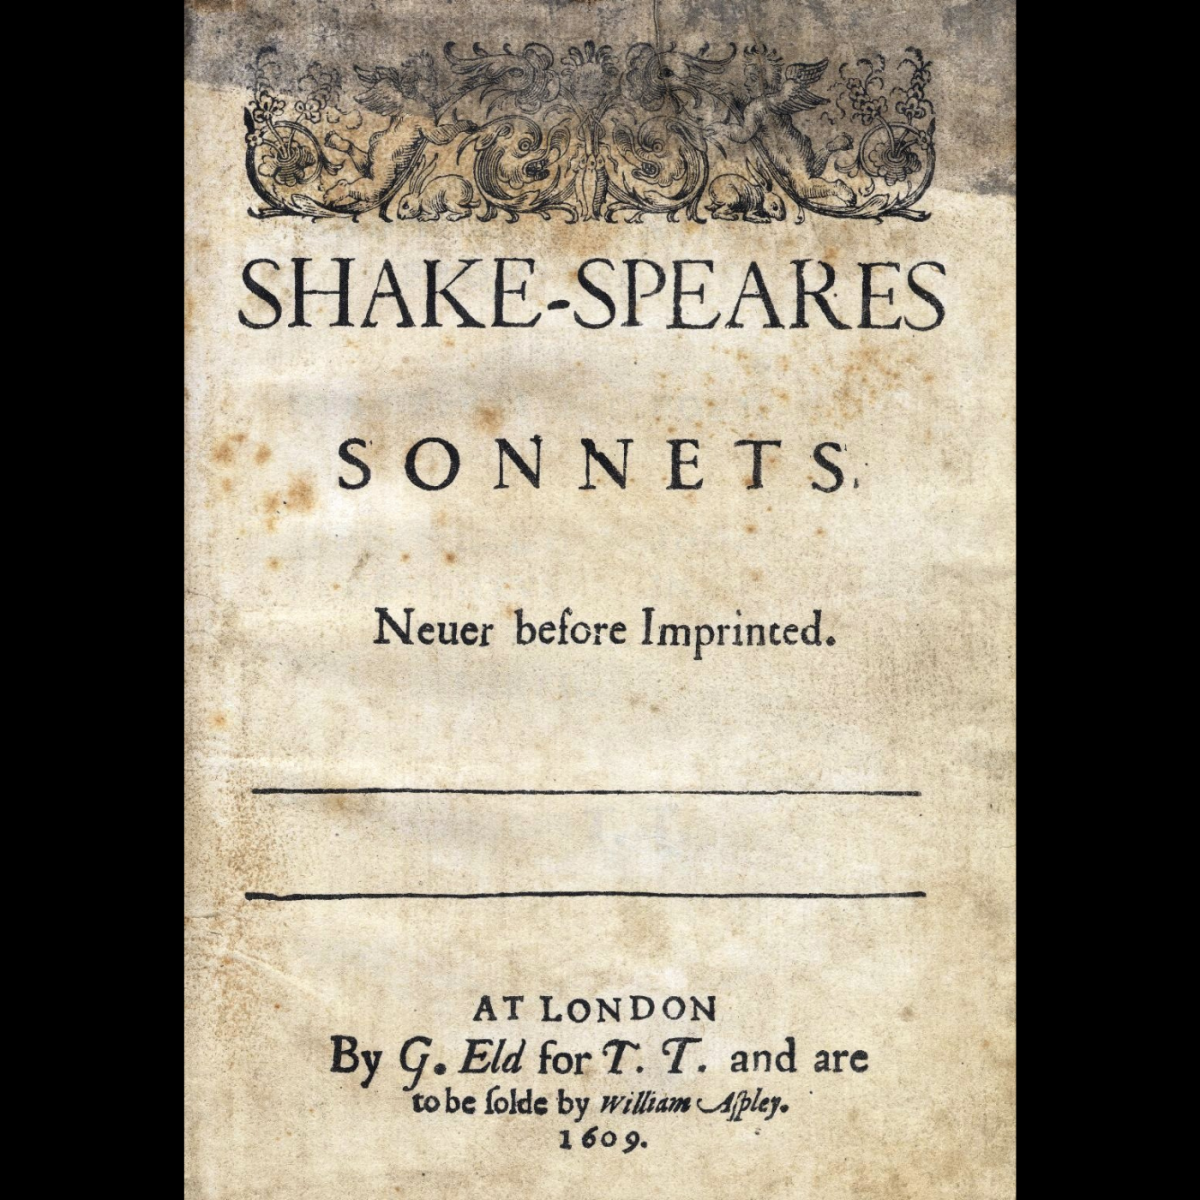 sonnet 18 interpretation